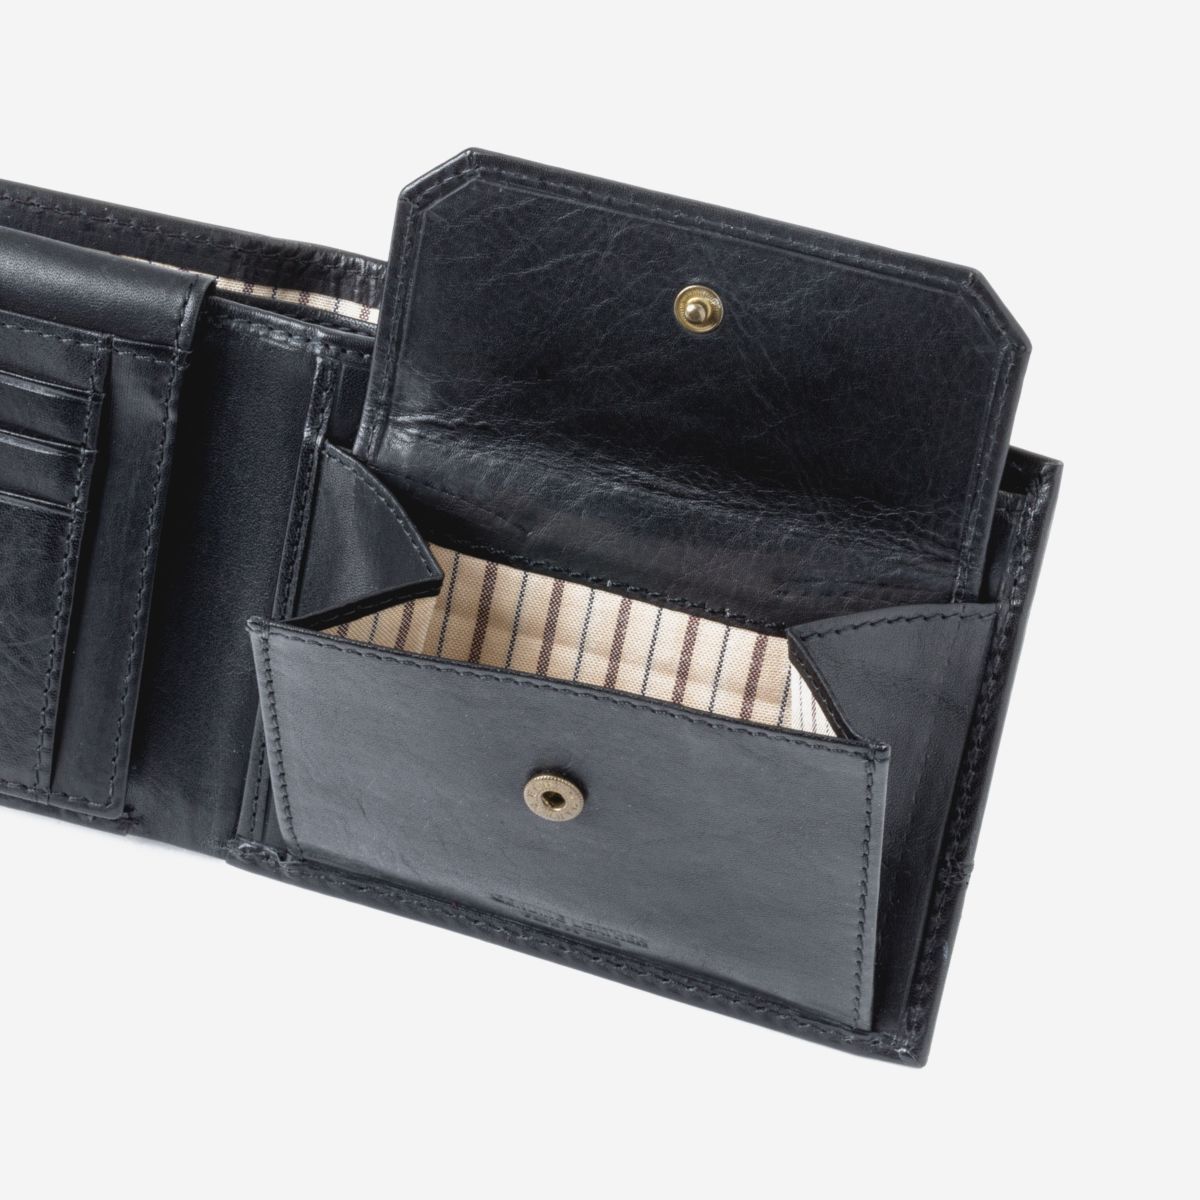 DuDu Leather Wallet With Coin Pocket For Men - Black